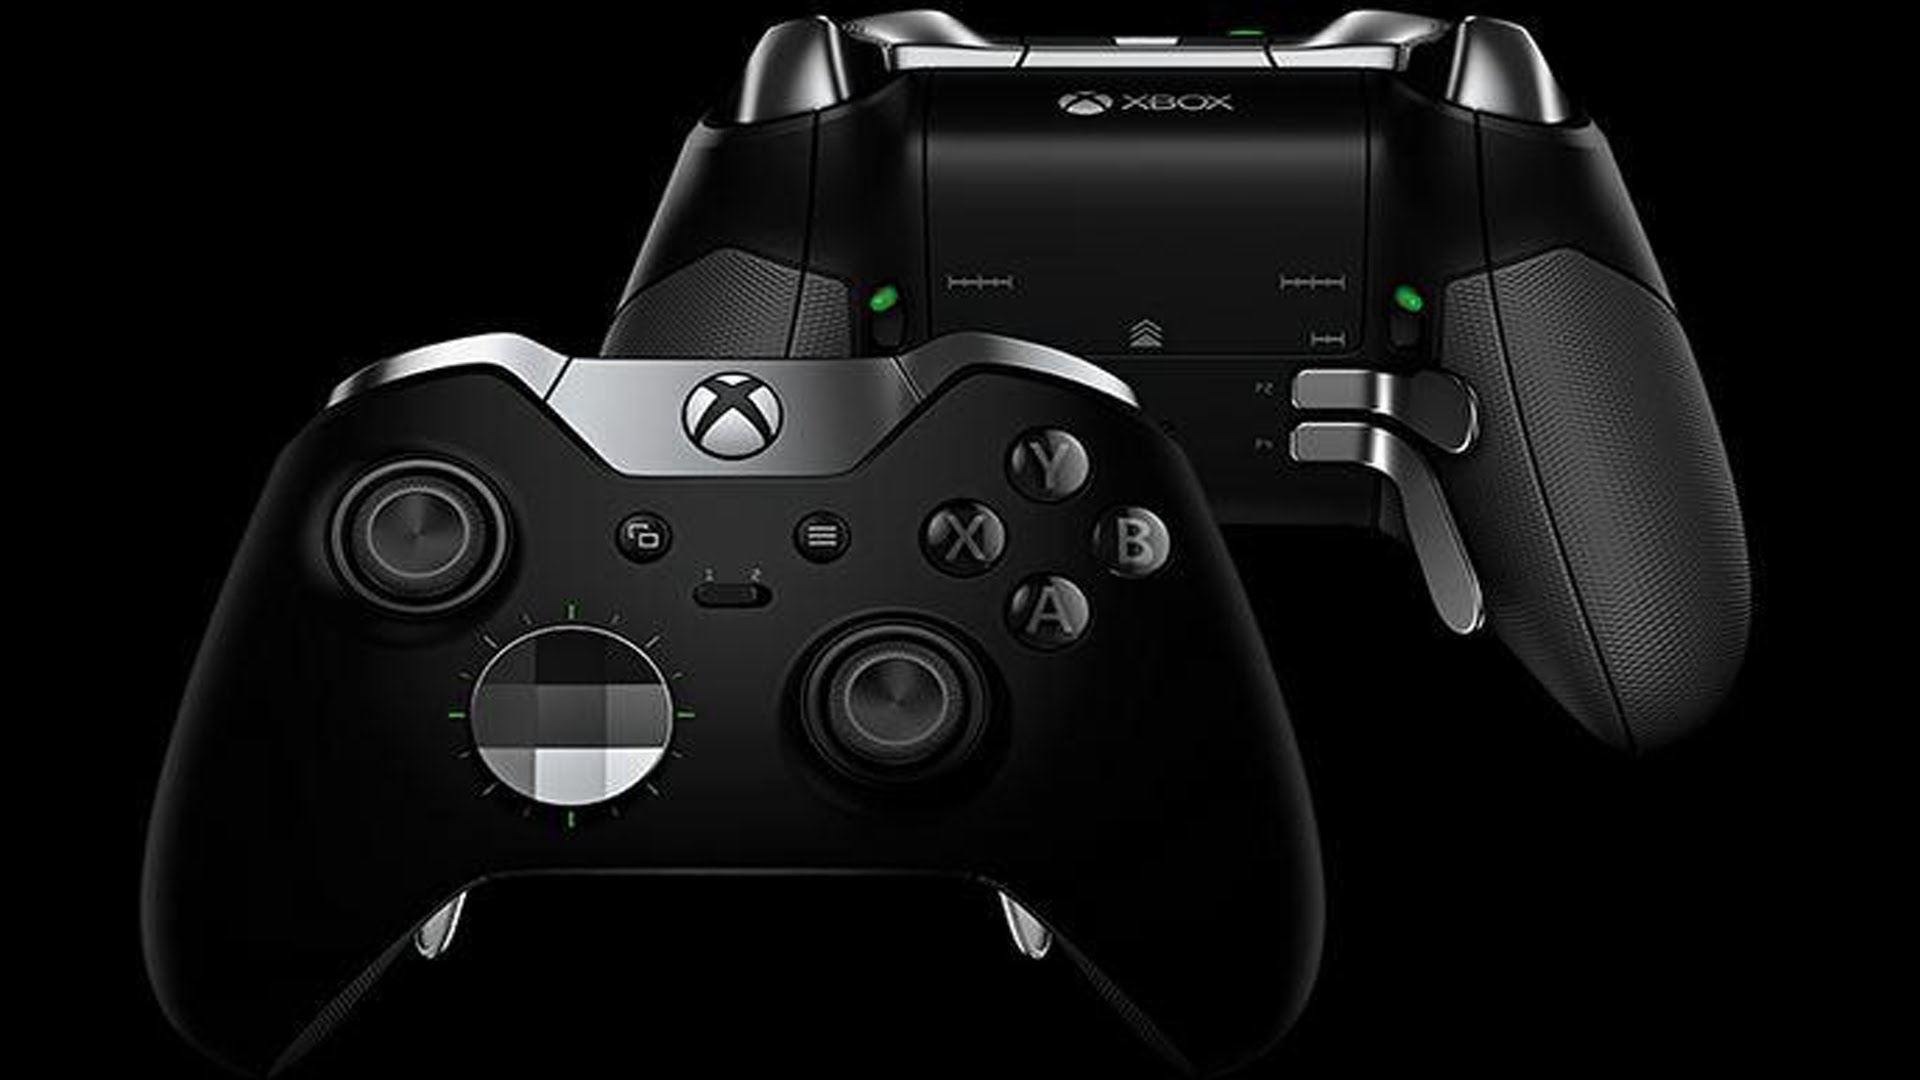 Xbox One Elite HD Image Amb Wallpaper